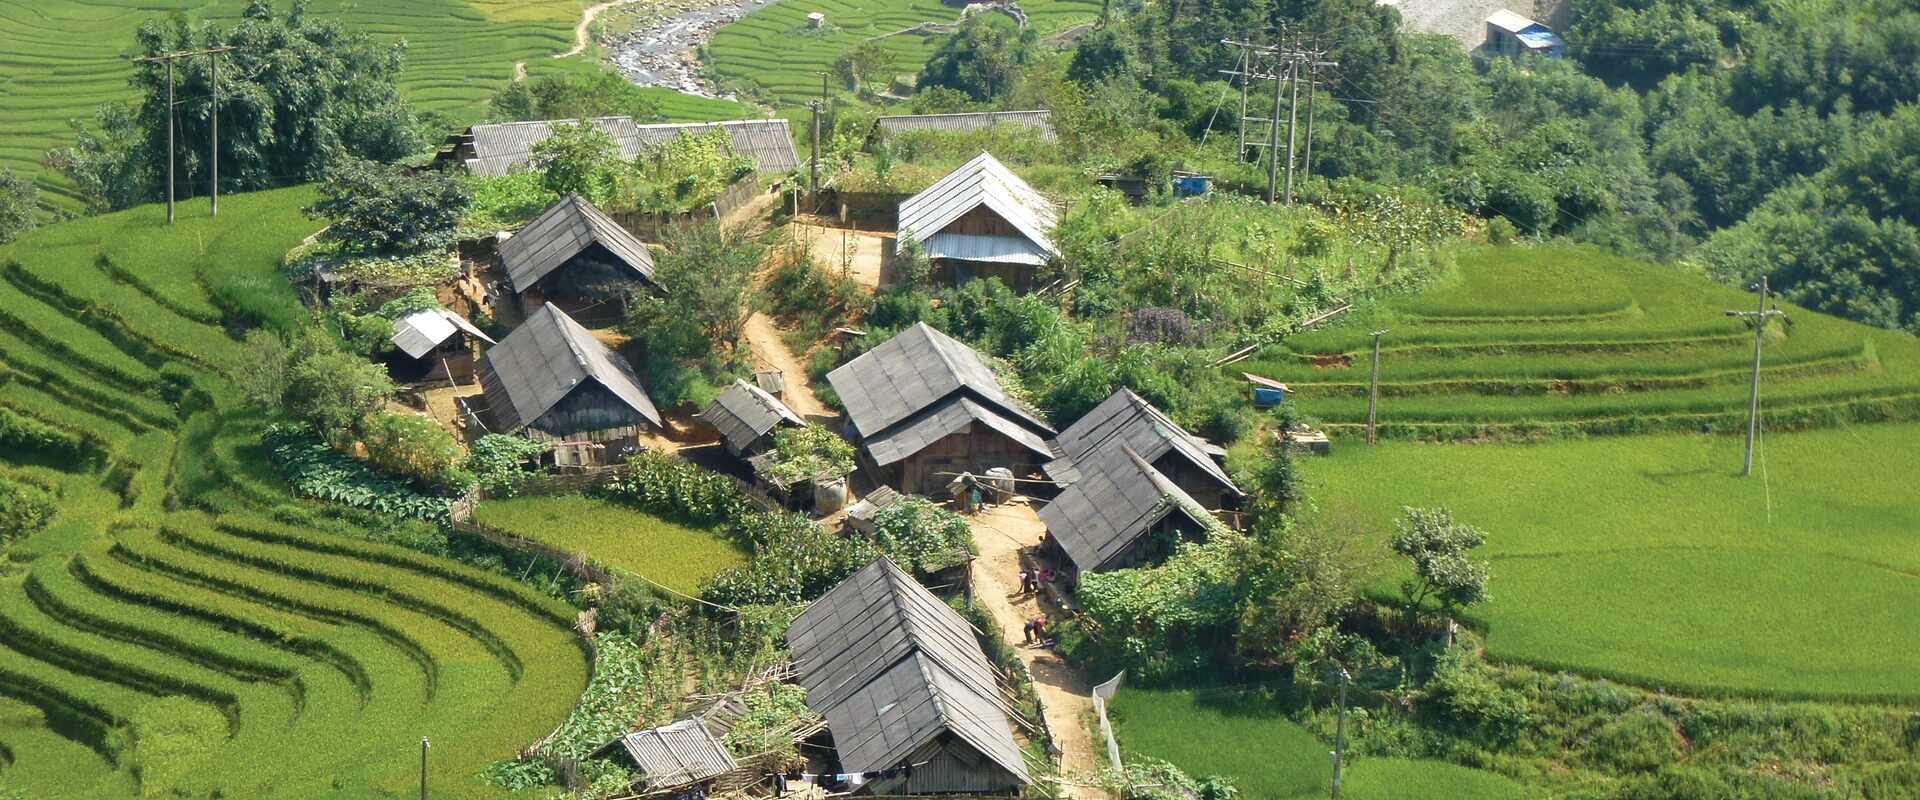 buildings rice fields sapa, vietnam